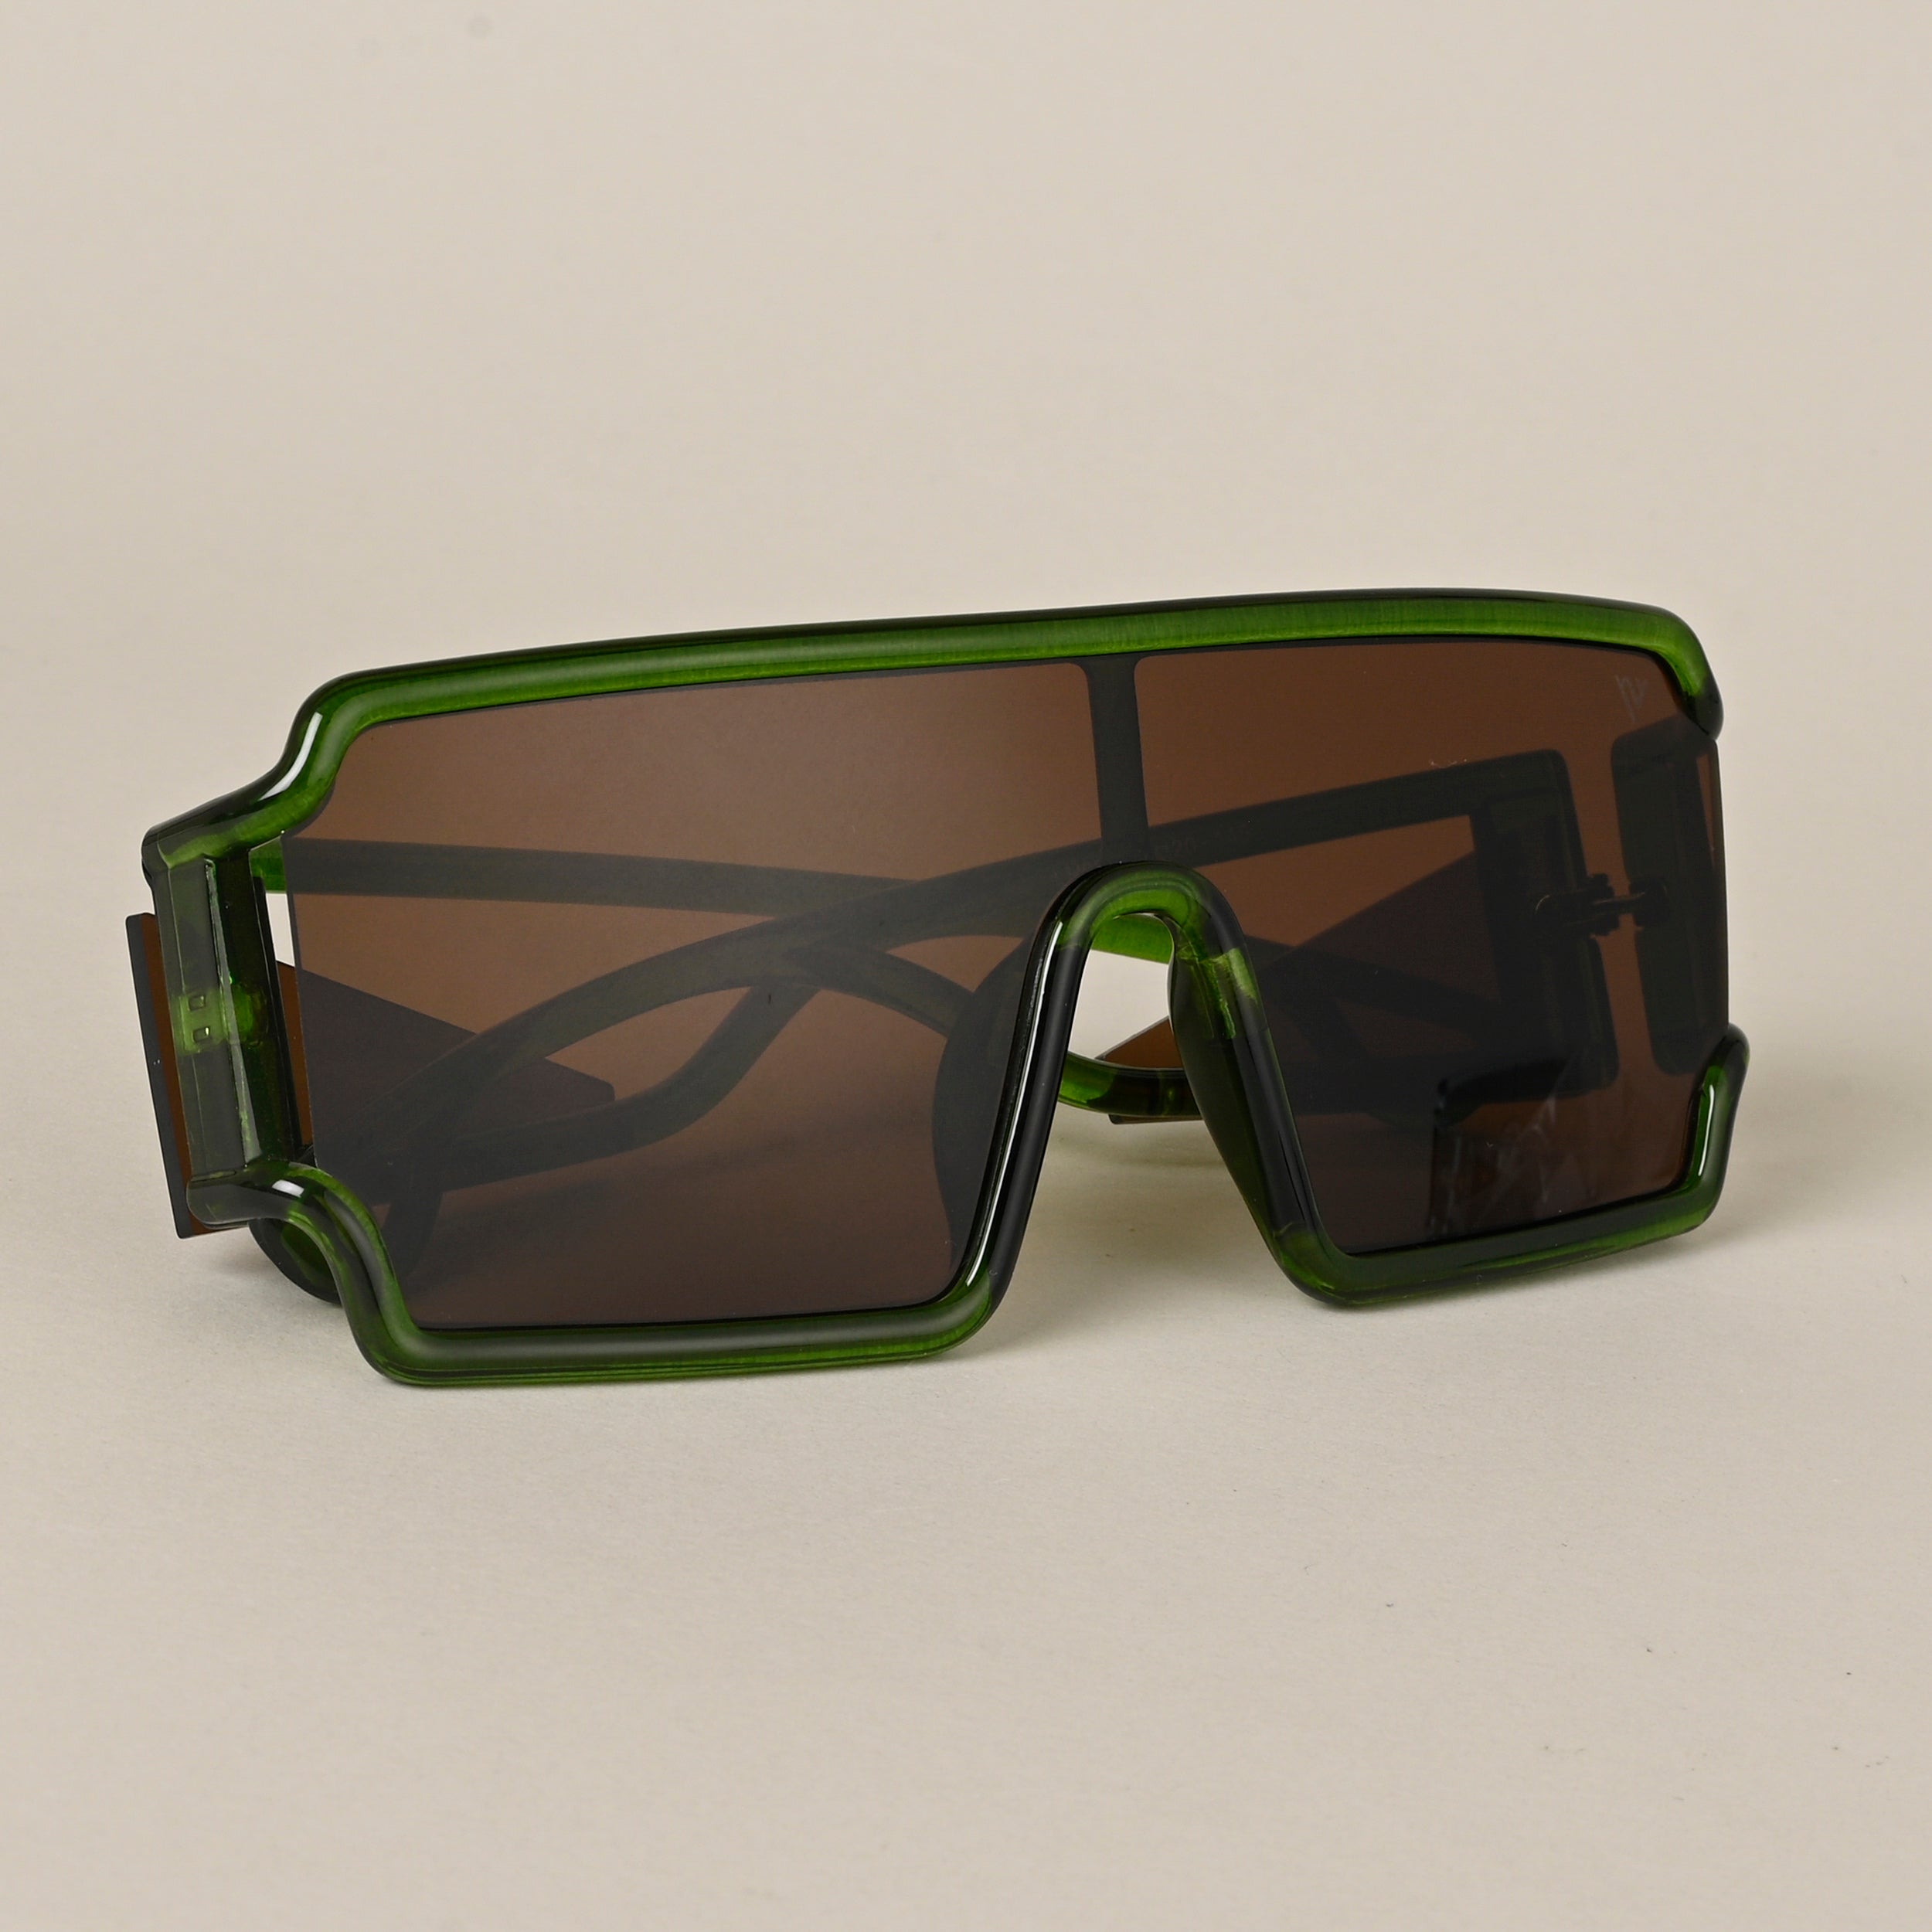 Voyage Mossy Green Wayfarer Sunglasses for Men & Women - MG4561